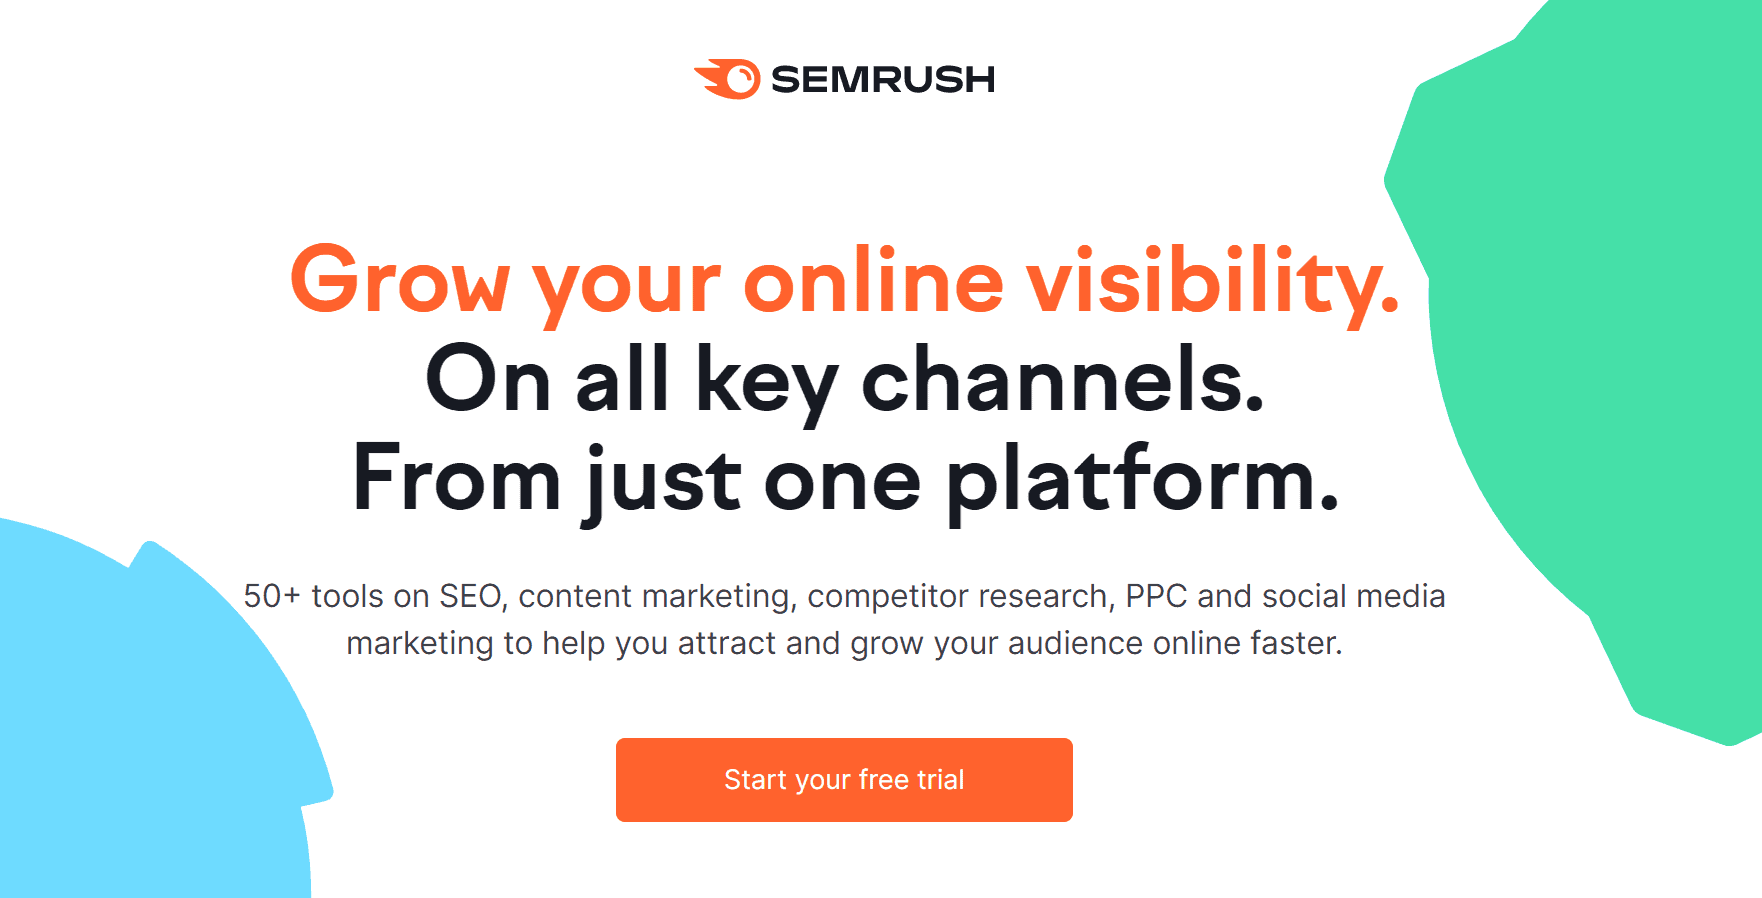 Semrush Overview